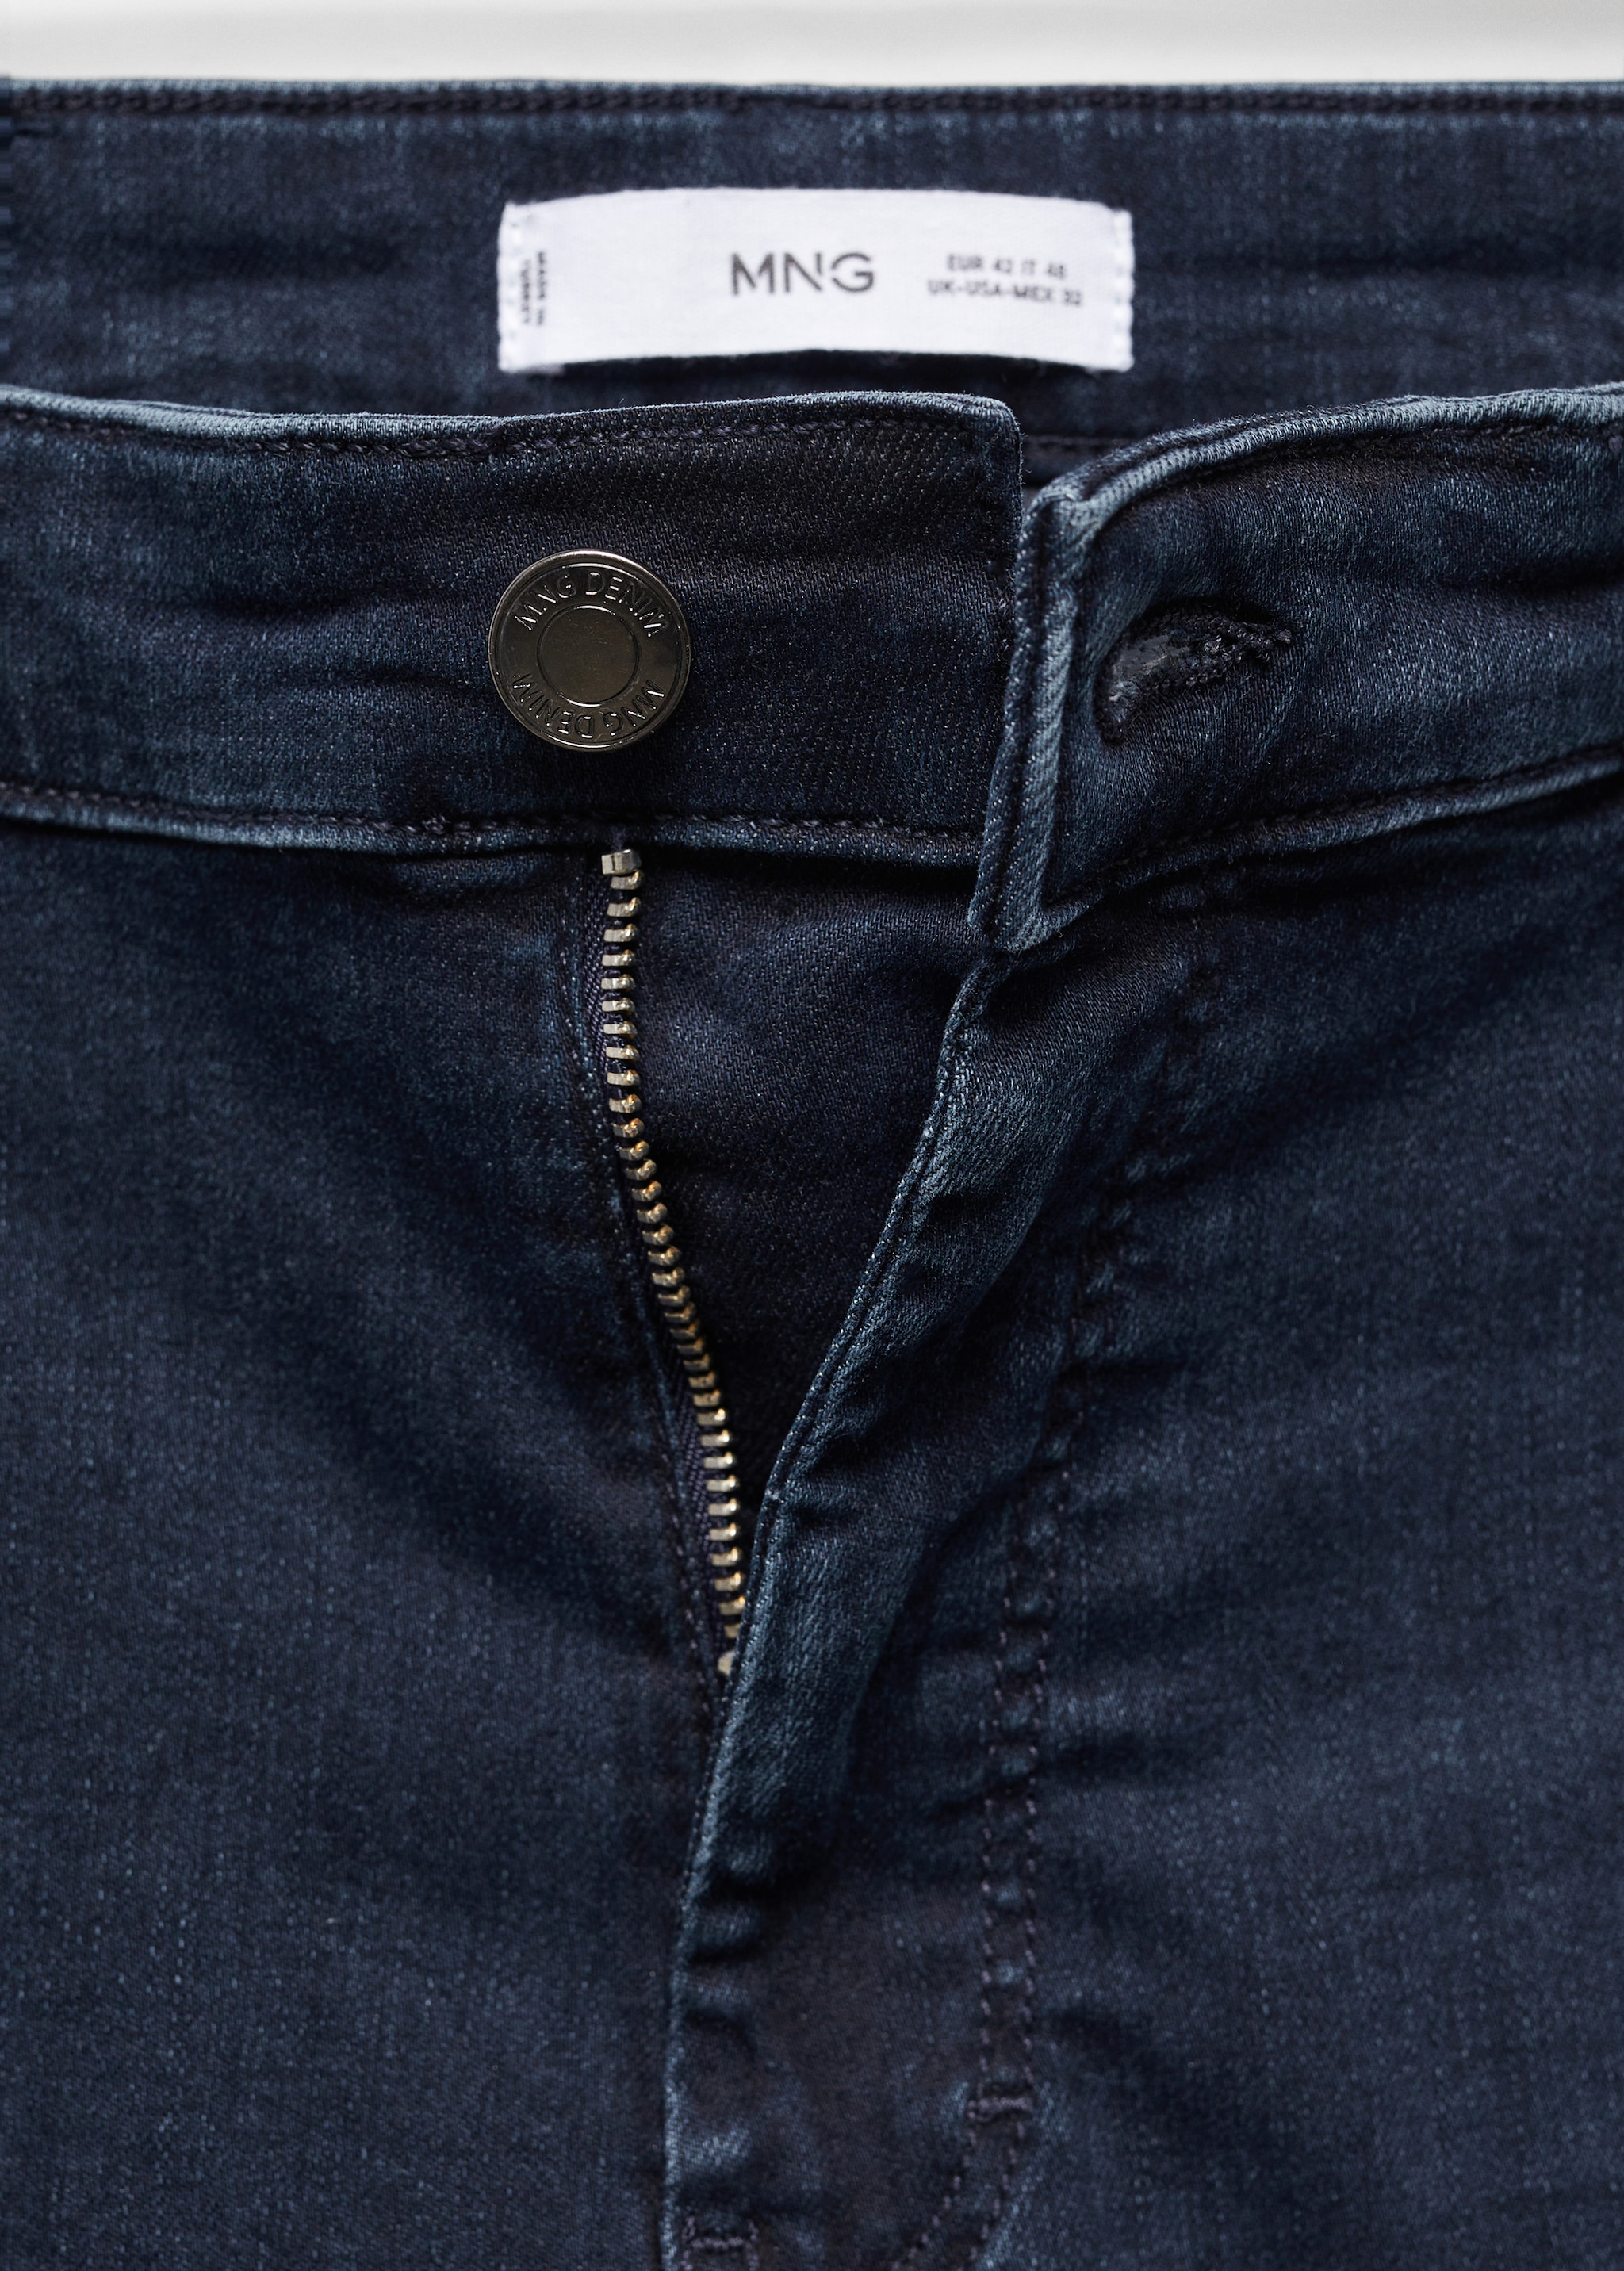 Patrick ultra Soft Touch slim fit jeans - Detail van het artikel 8